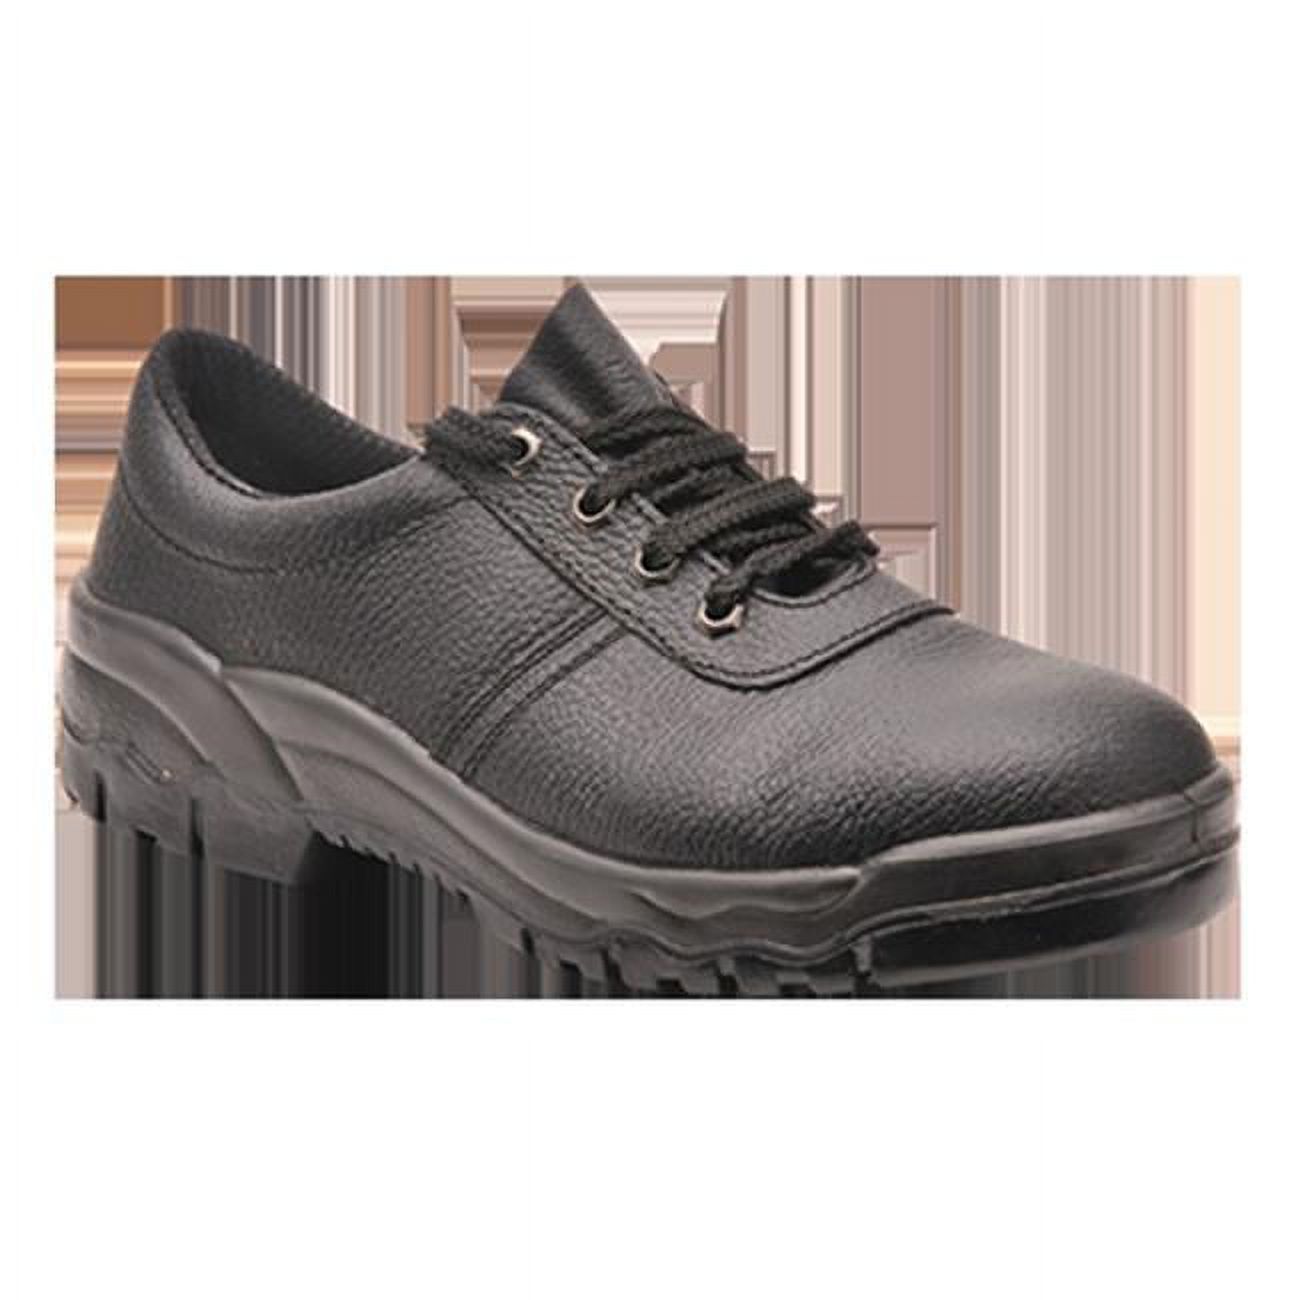 Portwest FW14 Steelite Protector Safety Shoe S1P Black, 39 - image 1 of 1